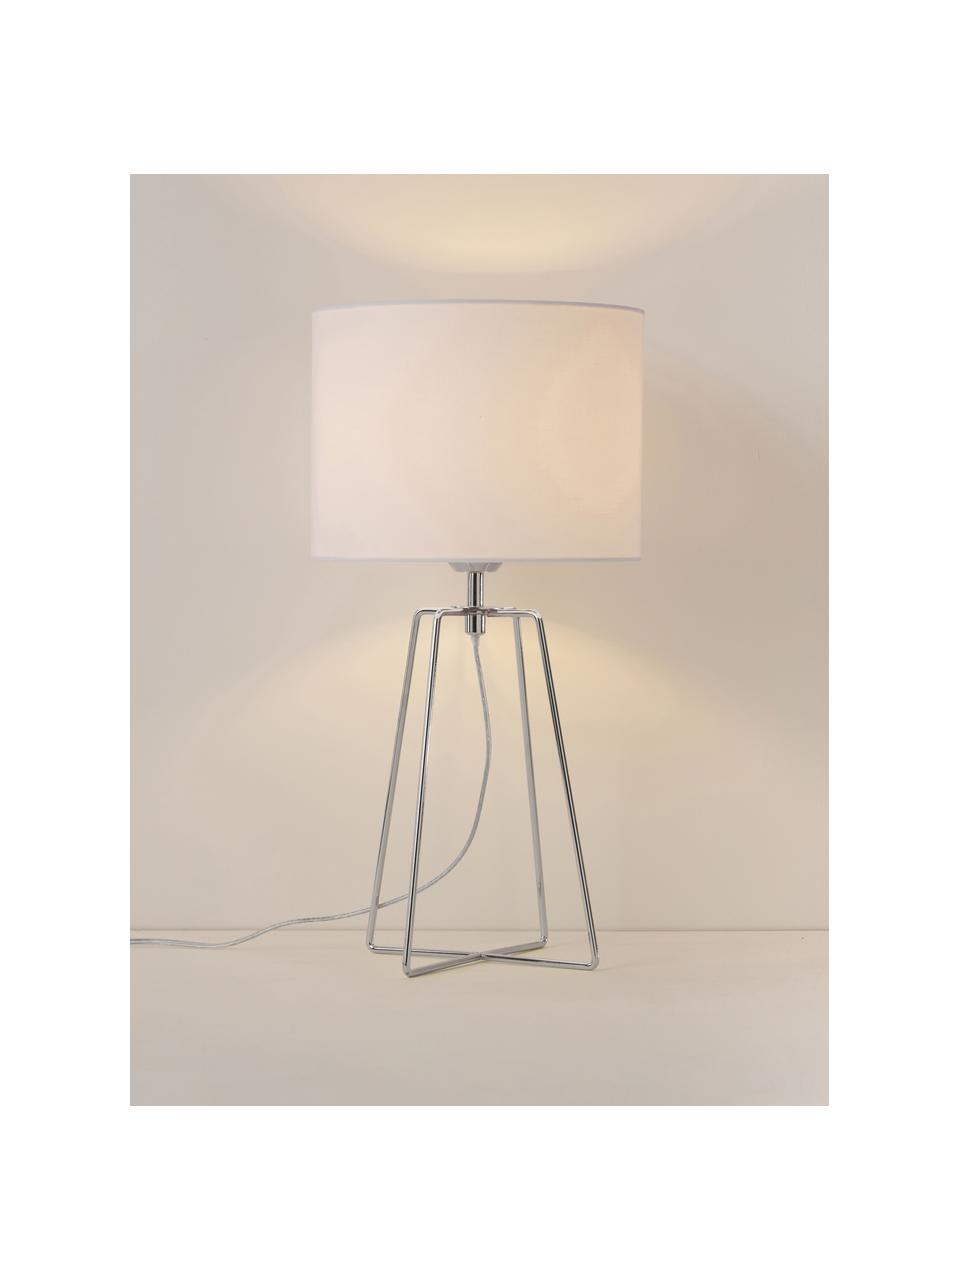 Lampe à poser Karolina, Blanc, gris chrome, Ø 25 x haut. 49 cm